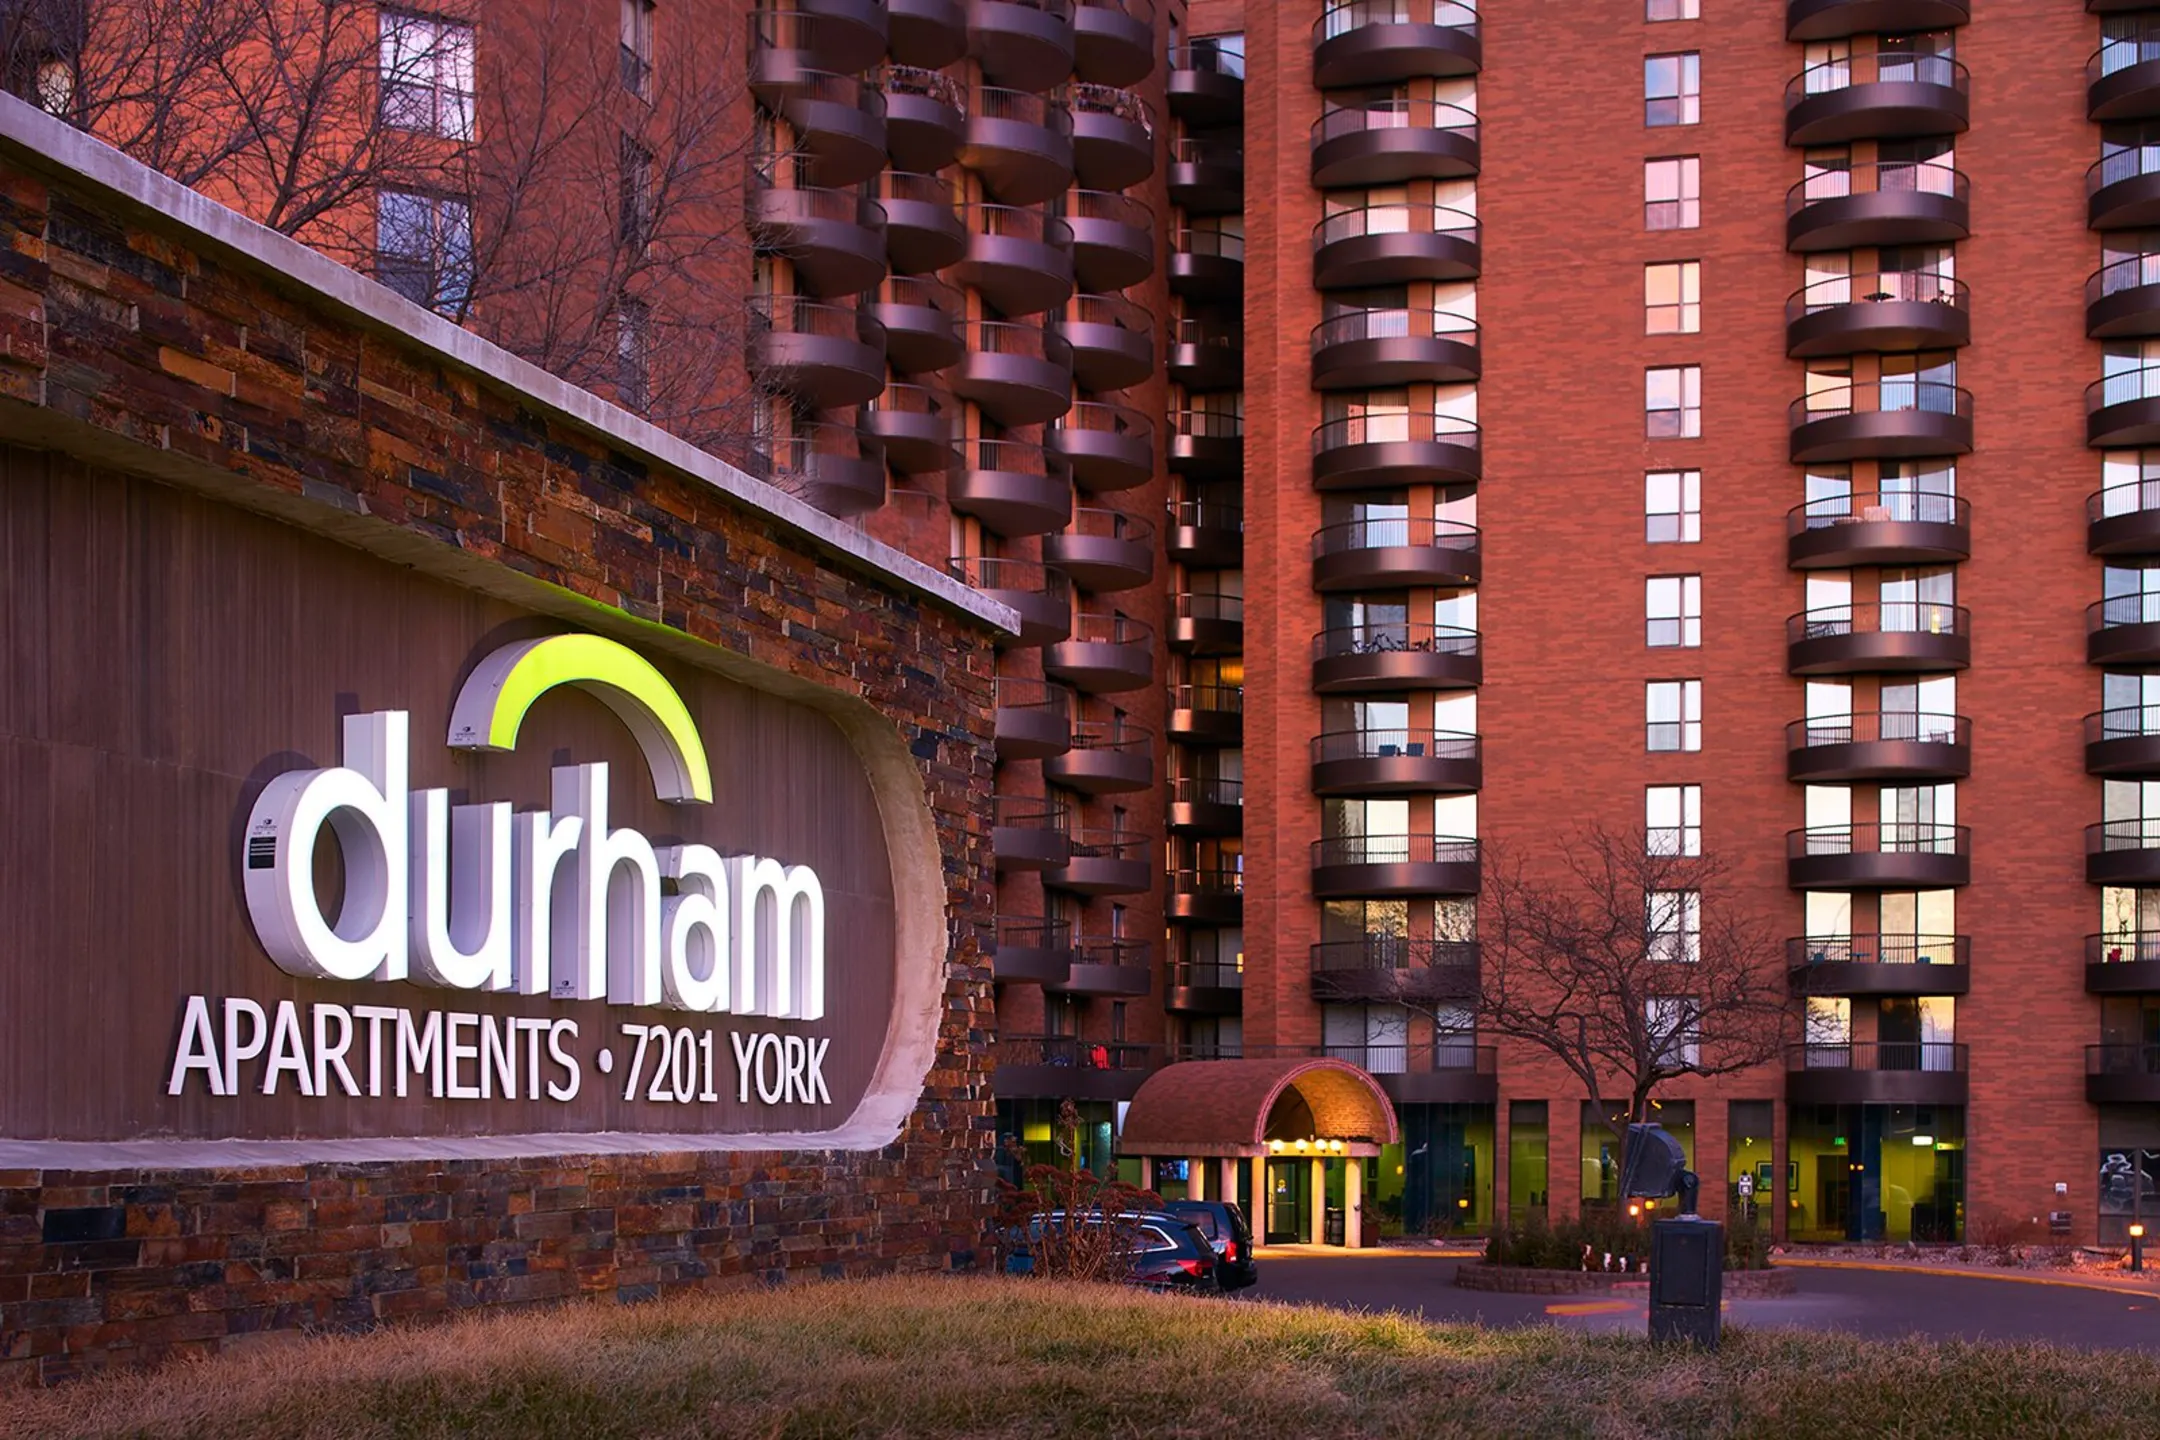 The Durham Apartments - Edina, MN